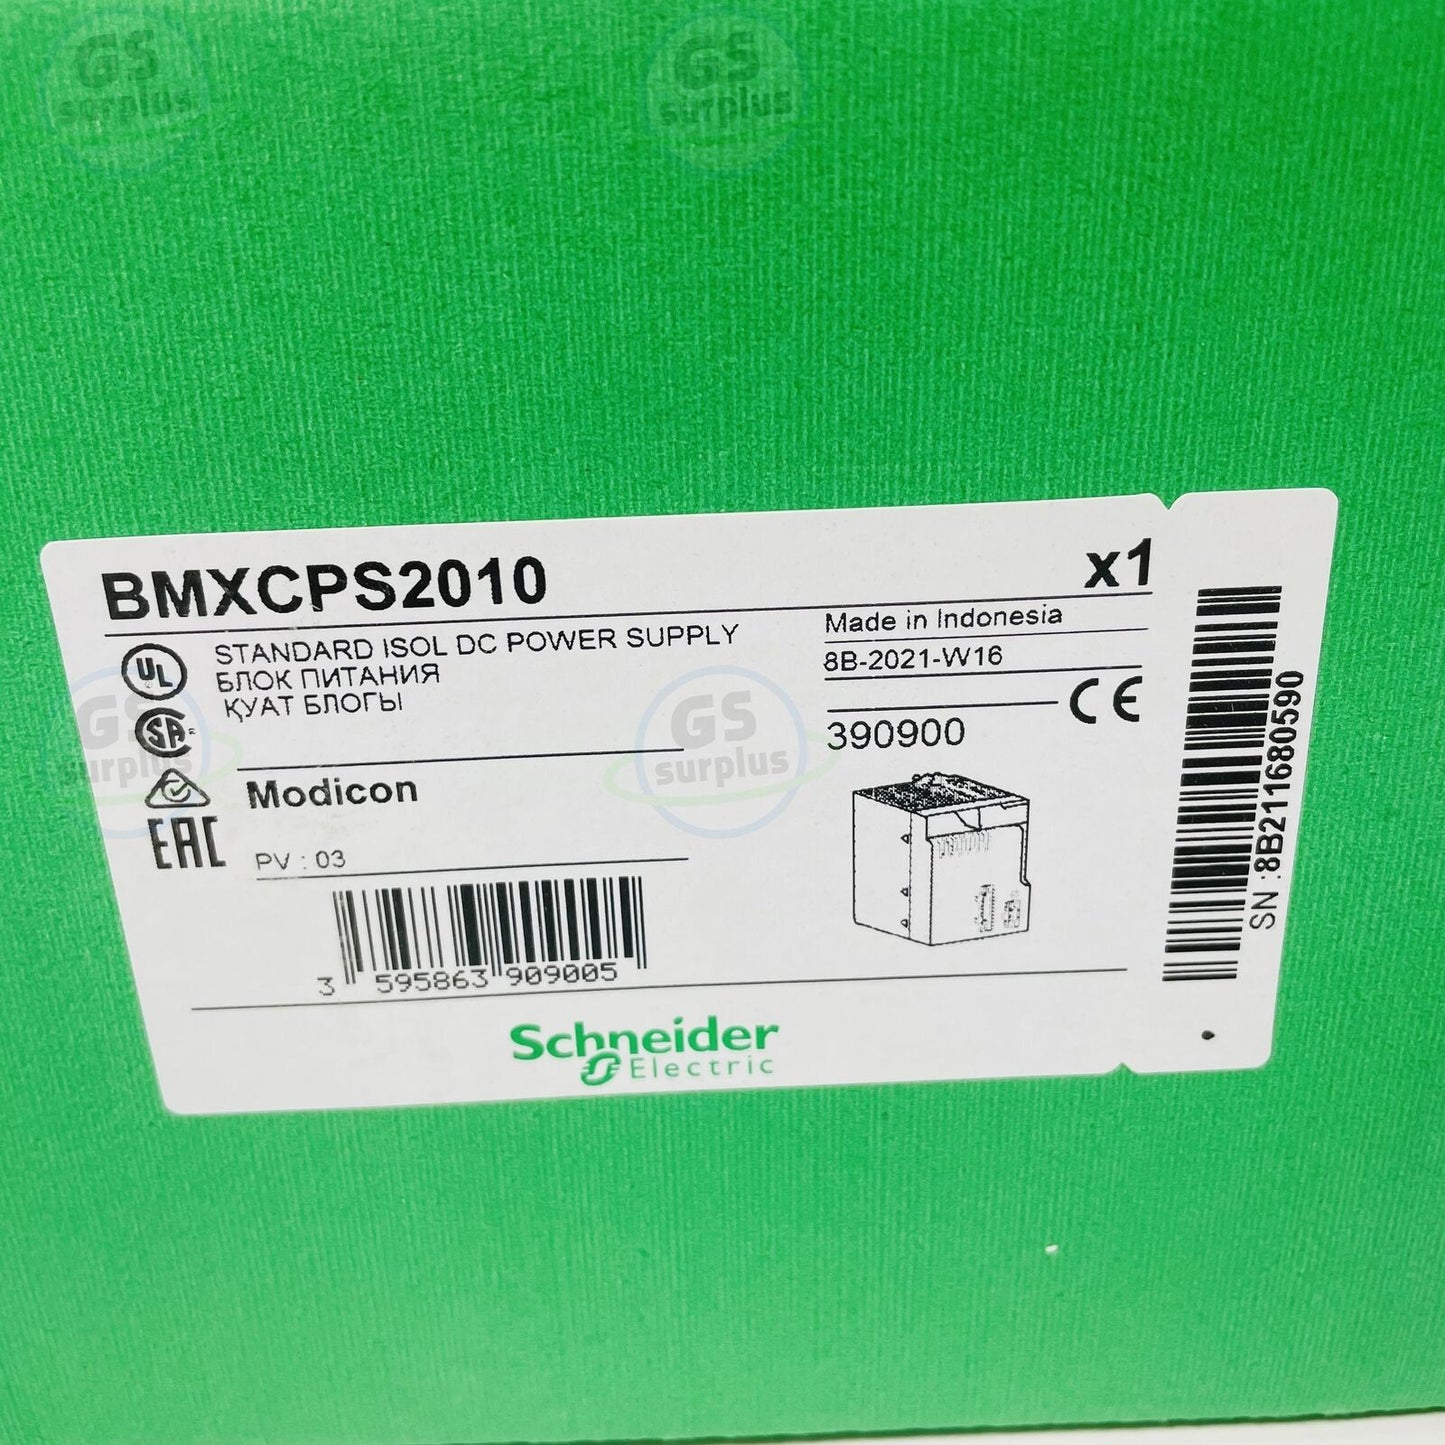 New SCHNEIDER BMXCPS2010 DC Power Supply, Modicon 390900 Standard Isolated